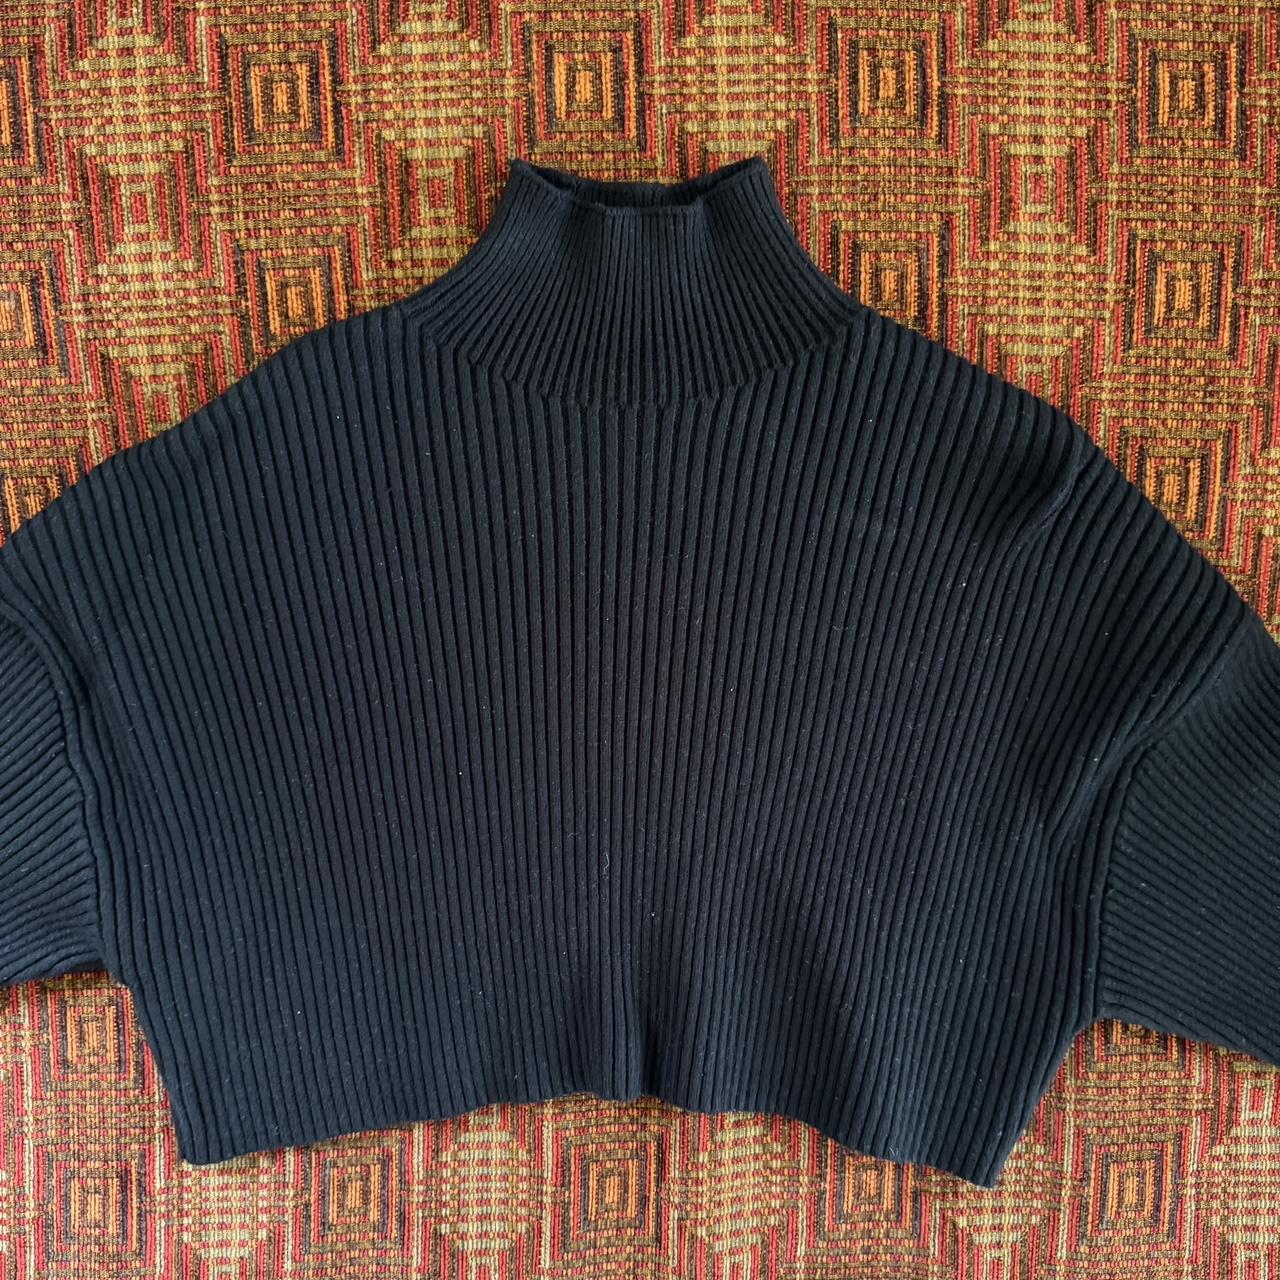 Cropped Zara mock neck sweater size M Comfy soft... - Depop